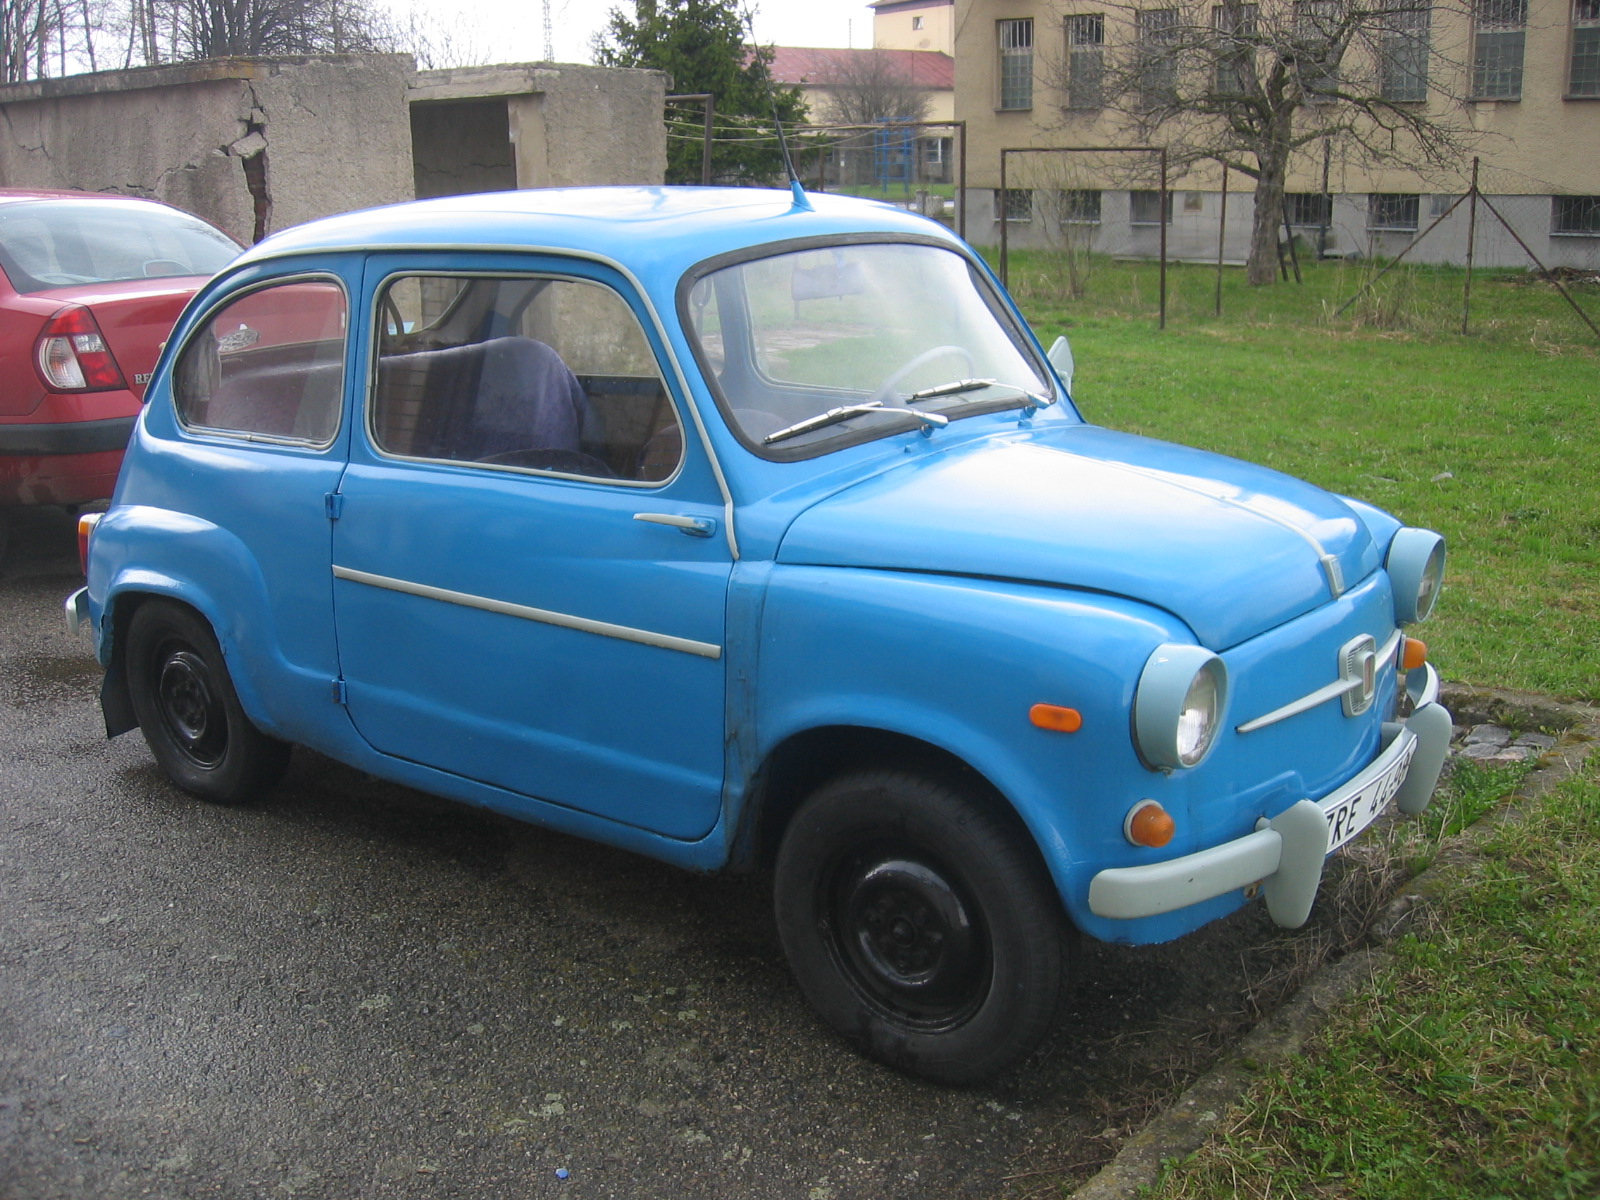 Fiat2.jpg